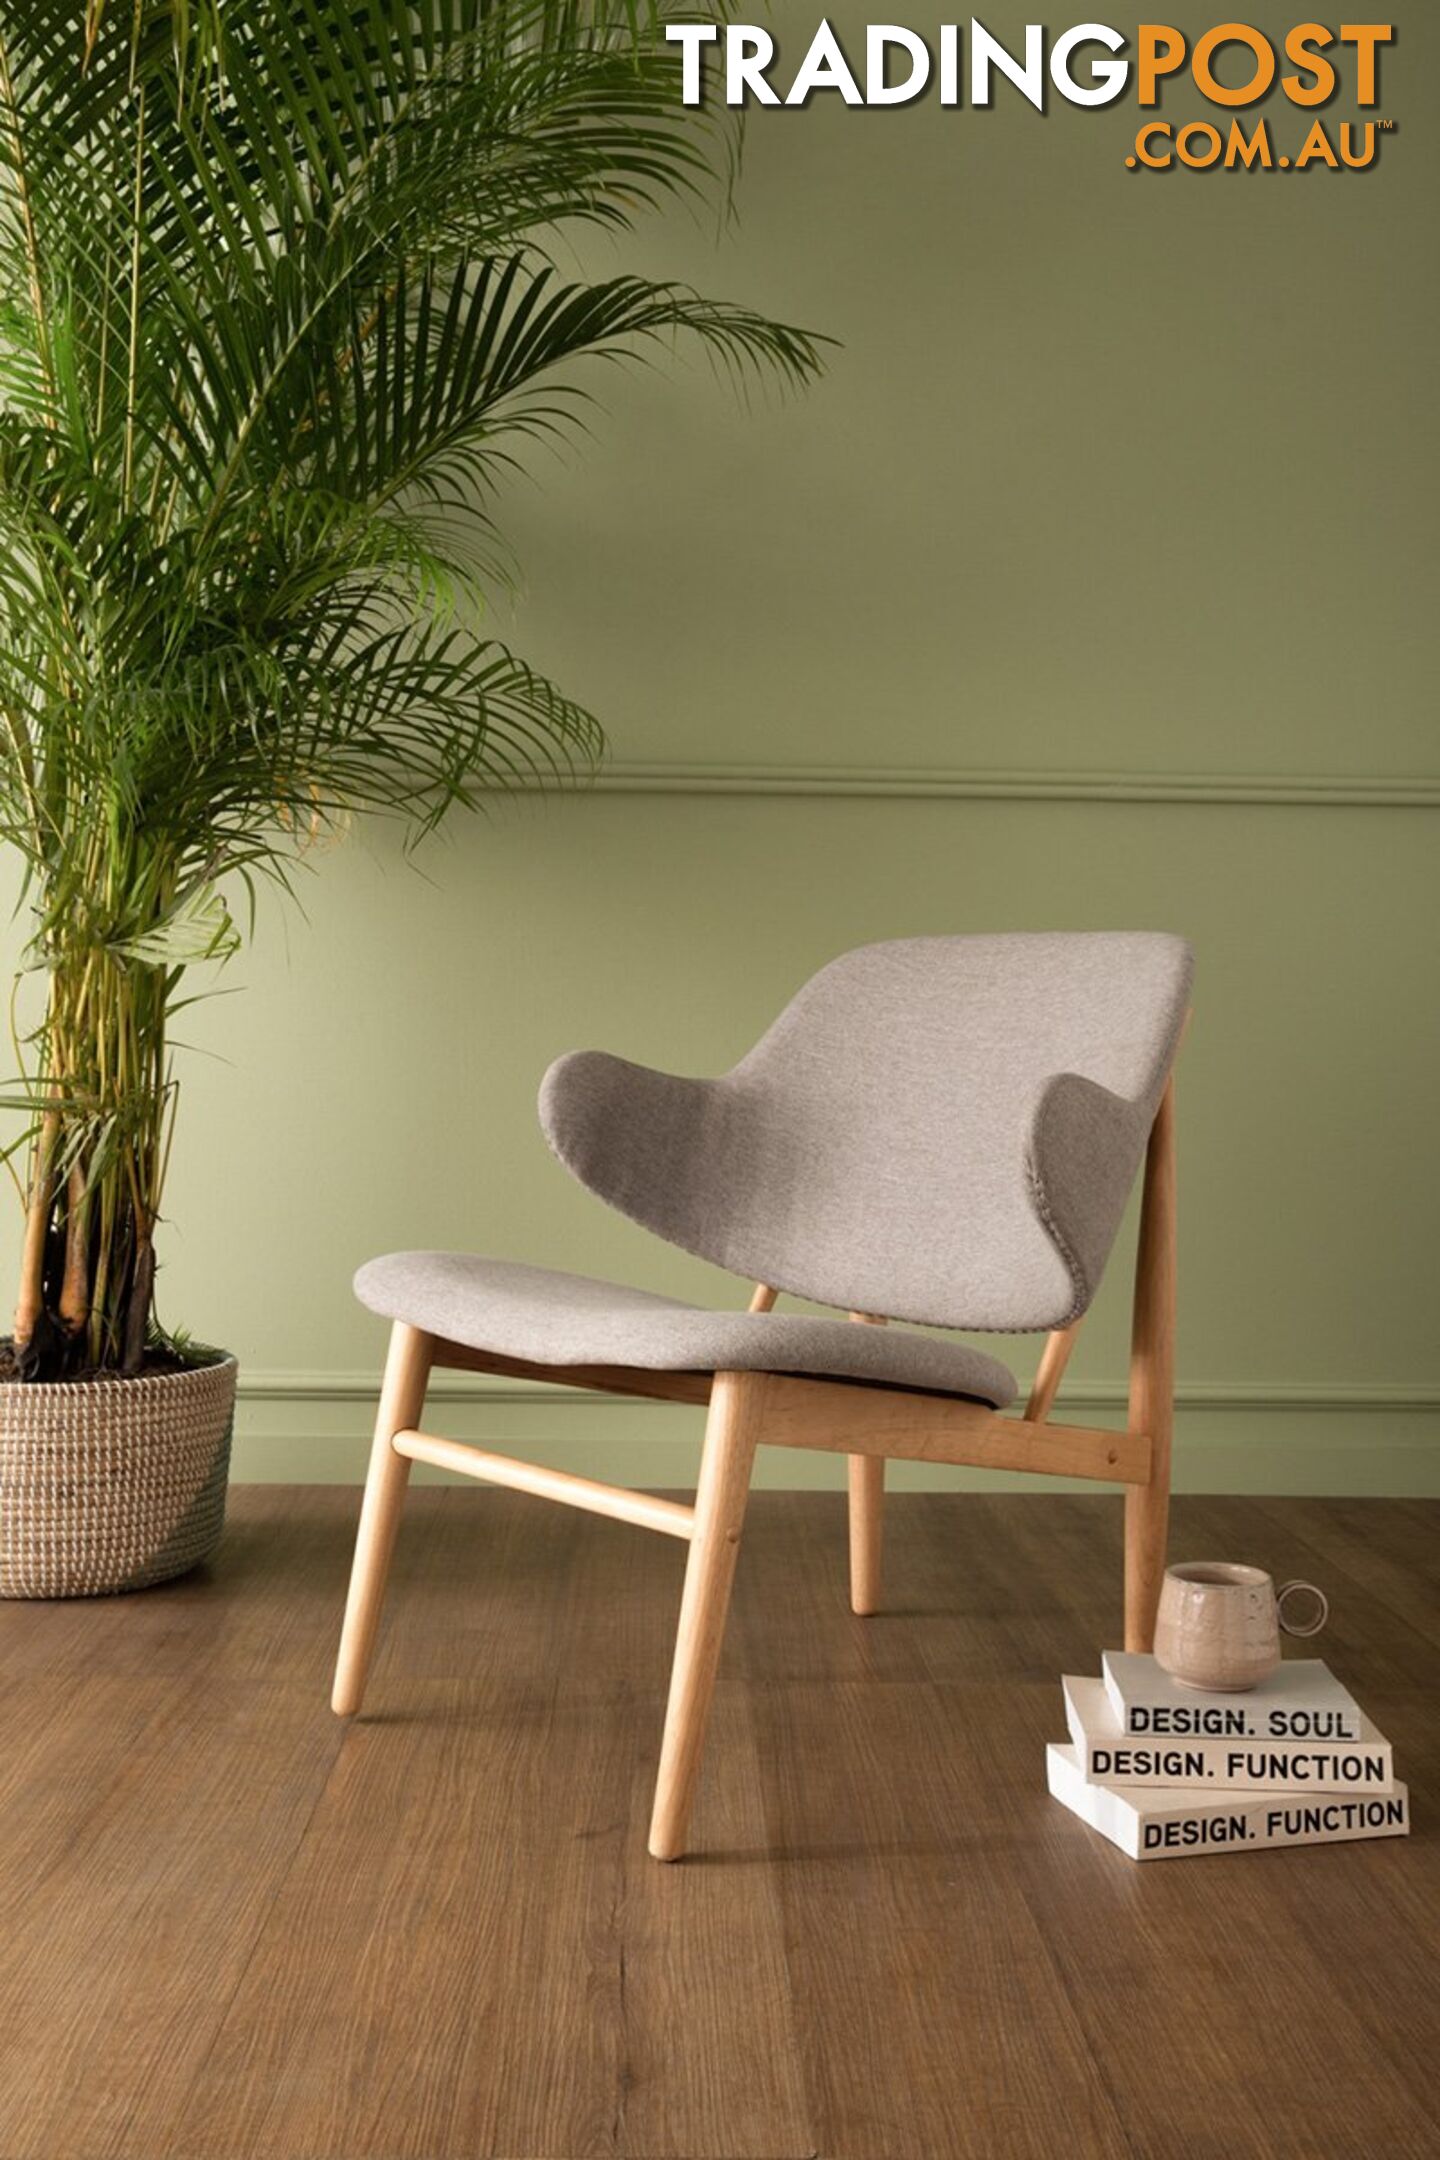 VERONIC Lounge Chair - Natural & Light Grey - 231246 - 9334719002194